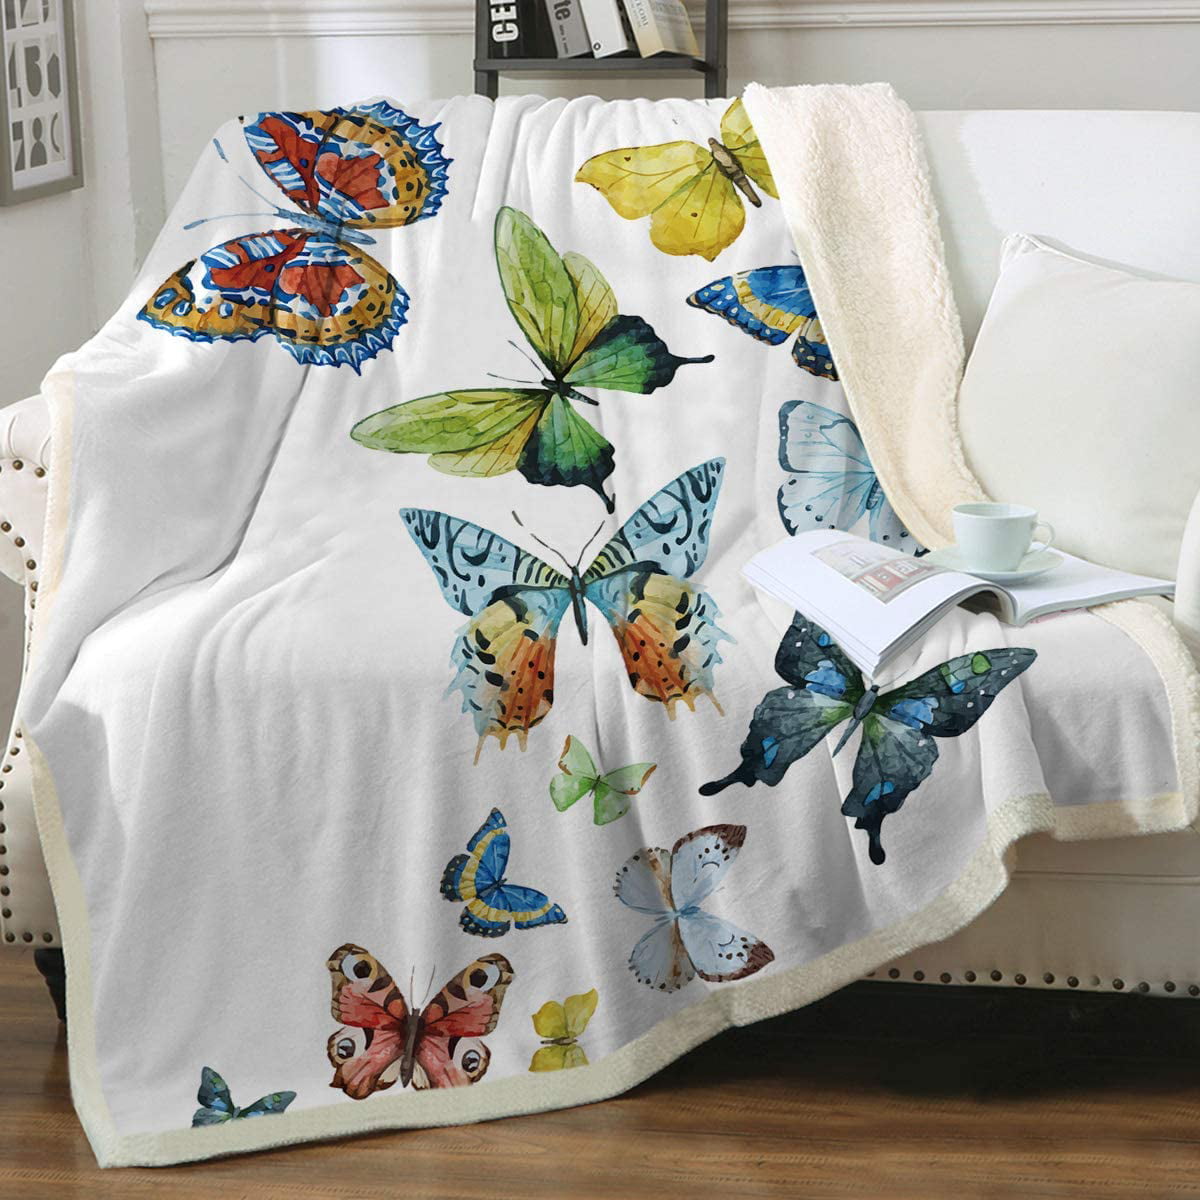 50x60 Sleepwish Gold Butterfly Throw Blanket Fuzzy Soft Plush Blanket Black Butterfly Fleece Blanket for Adults Women Girls Valentine's Day